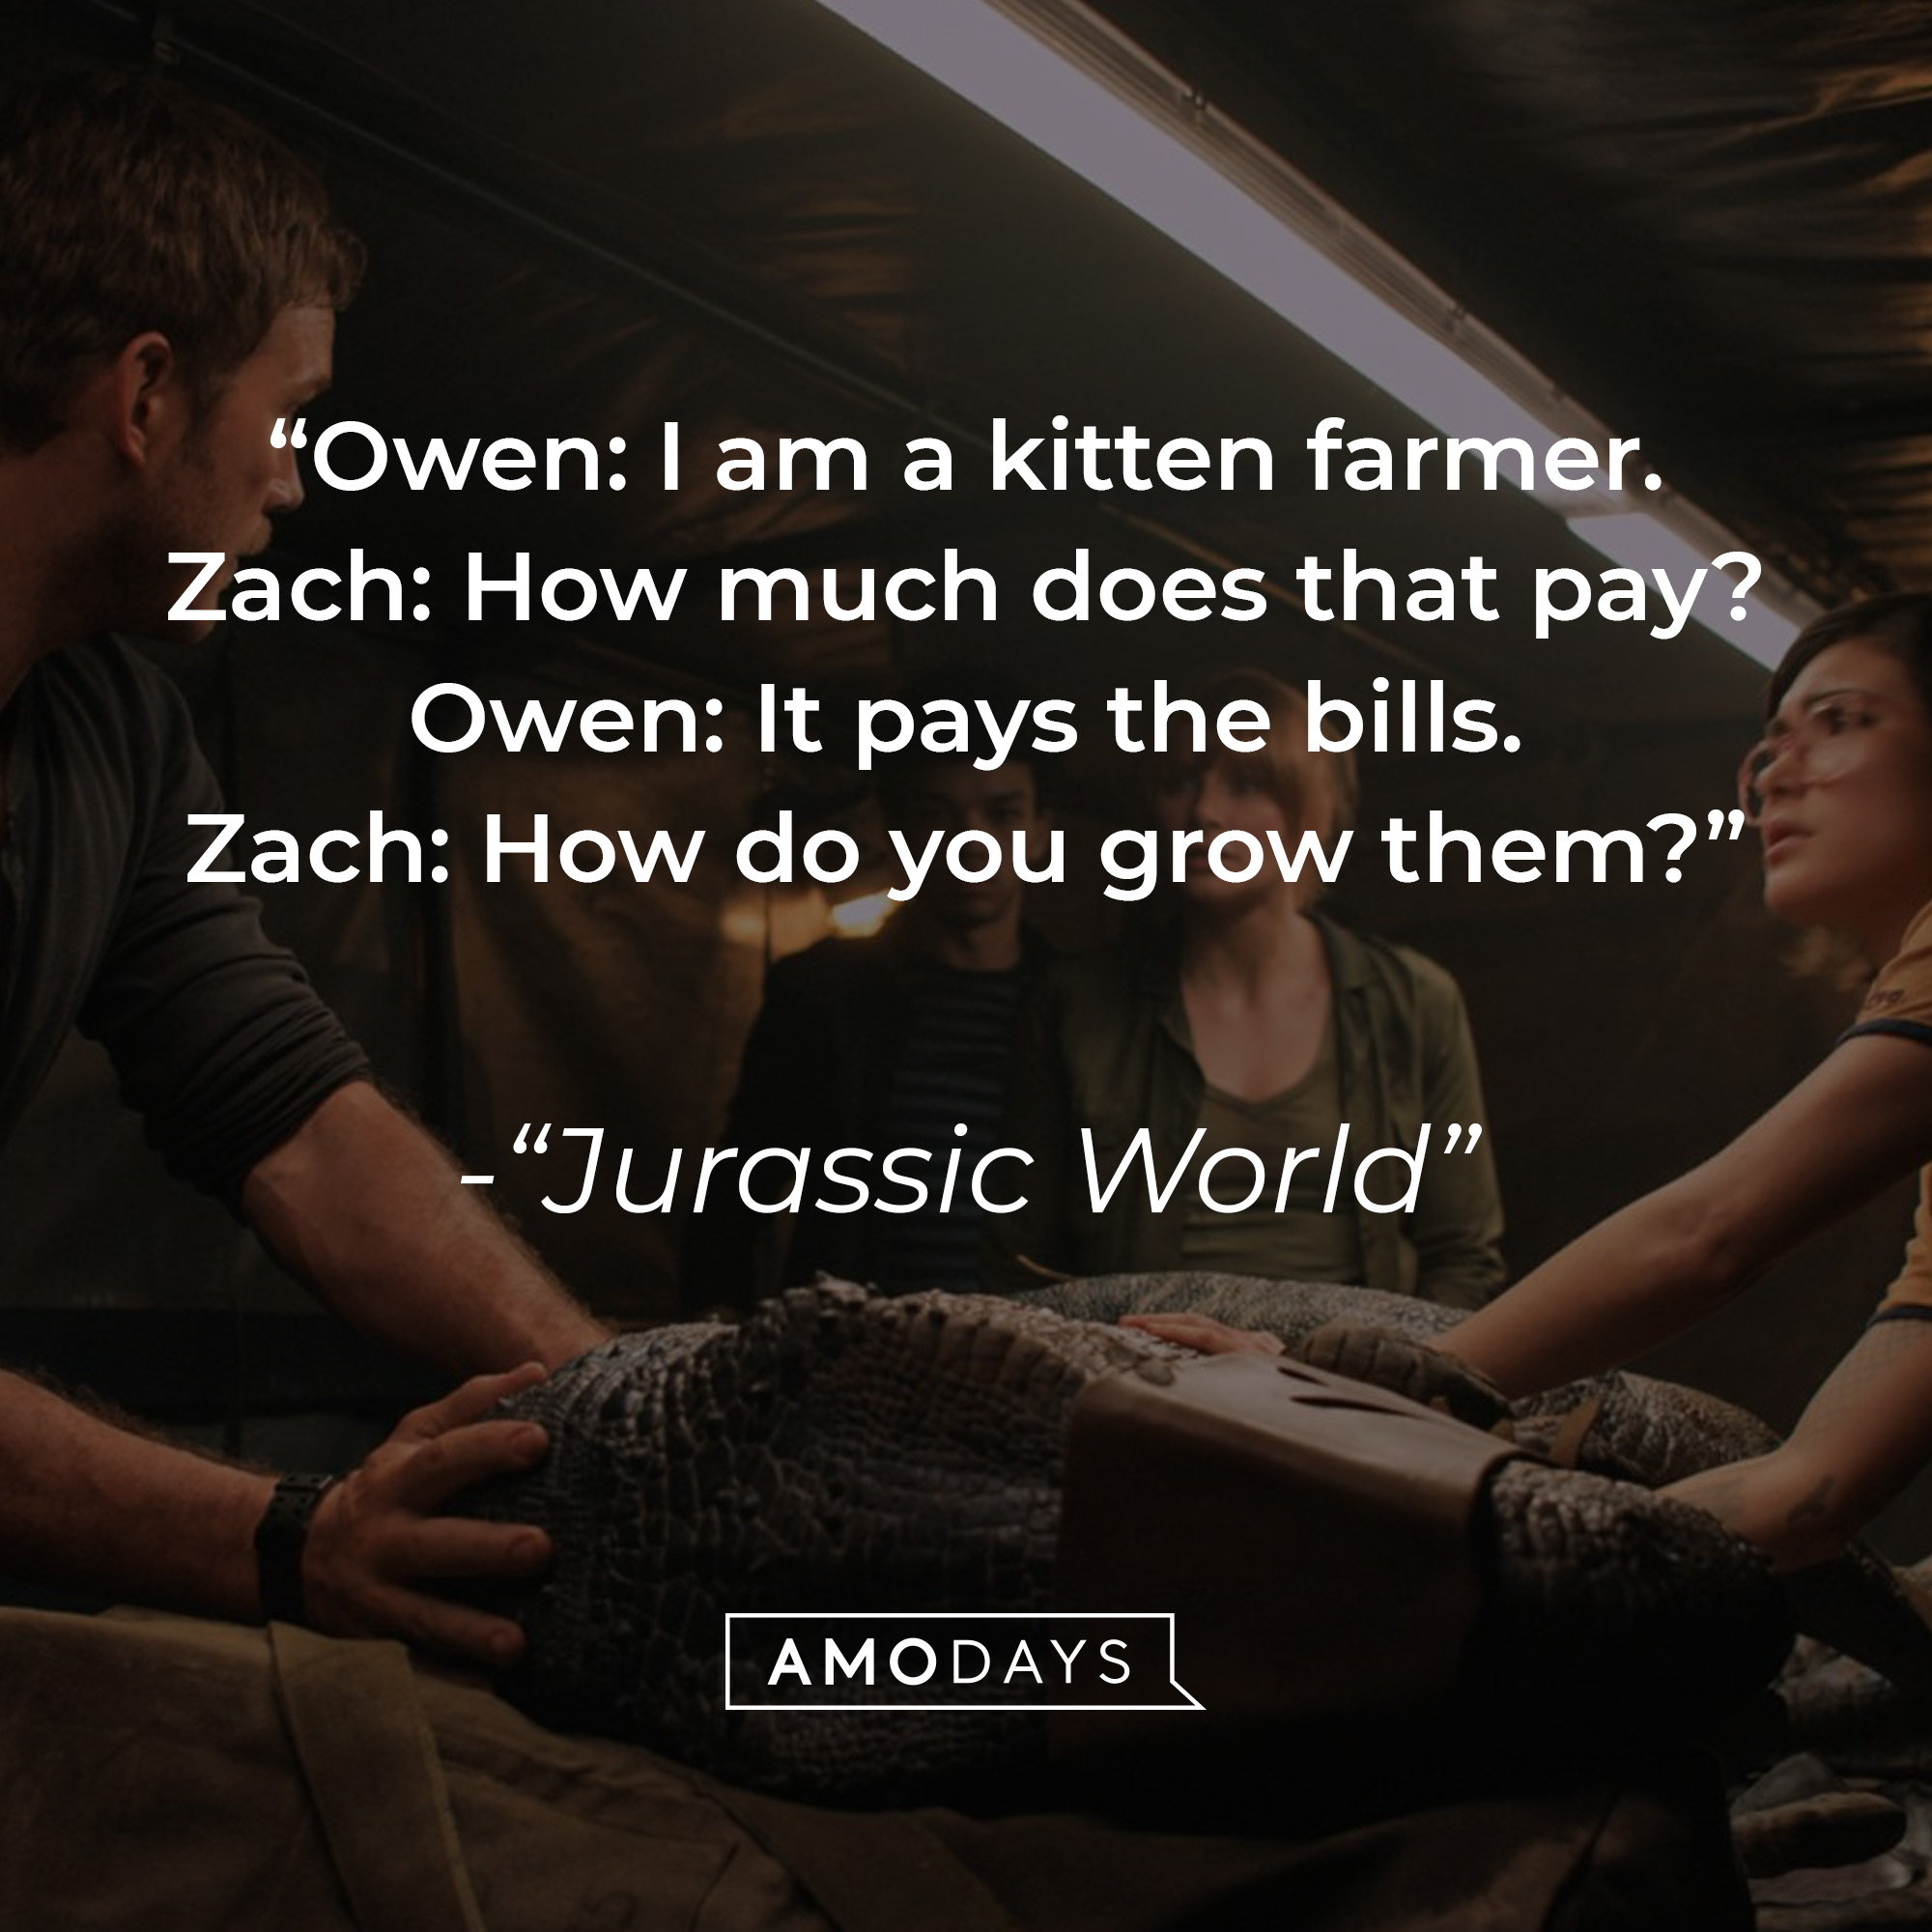 Quote from "Jurassic World:" "Owen: I am a kitten farmer. Zach: How much does that pay? Owen: It pays the bills. Zach: How do you grow them?" | Source: facebook.com/JurassicWorld